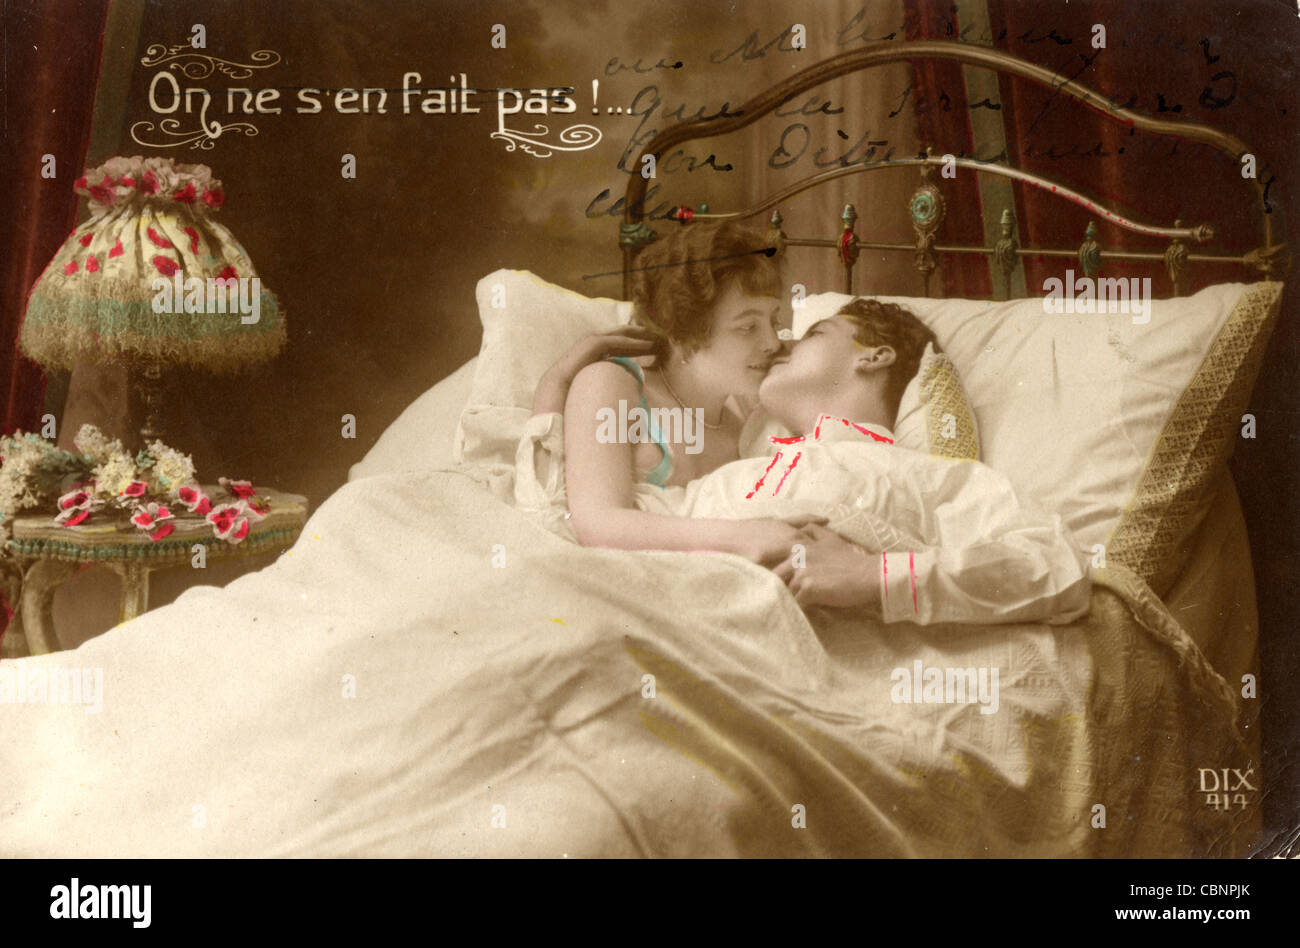 La passion Couple Kissing in Bed Banque D'Images